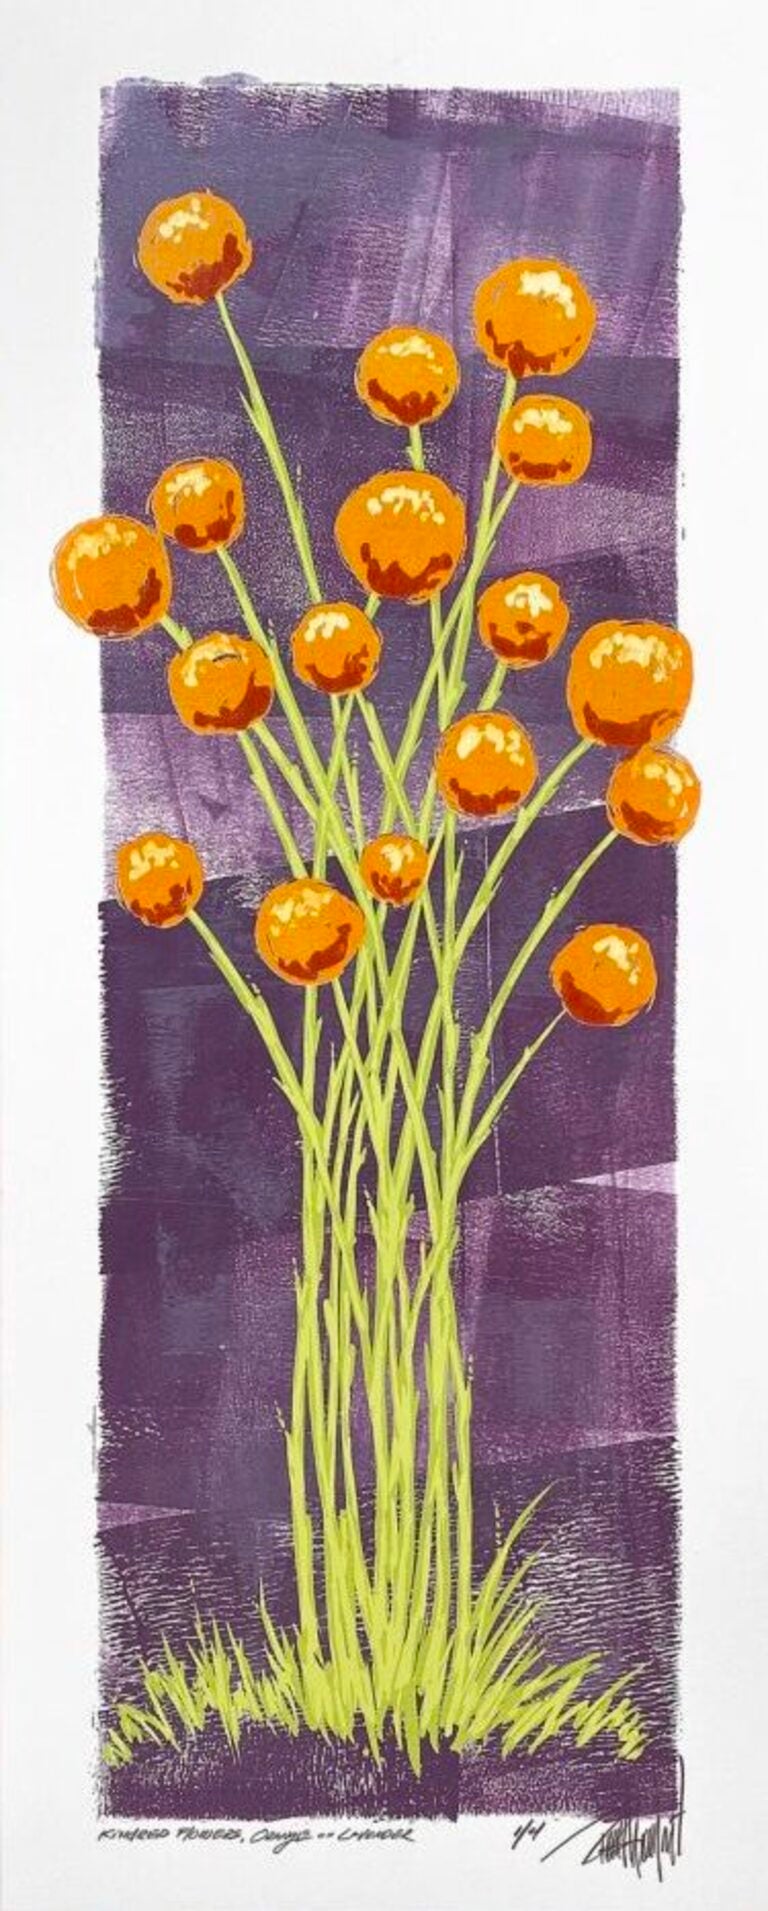 Terrell Thornhill  Landscape Print – Kindred Flowers, Orange auf Lavendel (2/4)